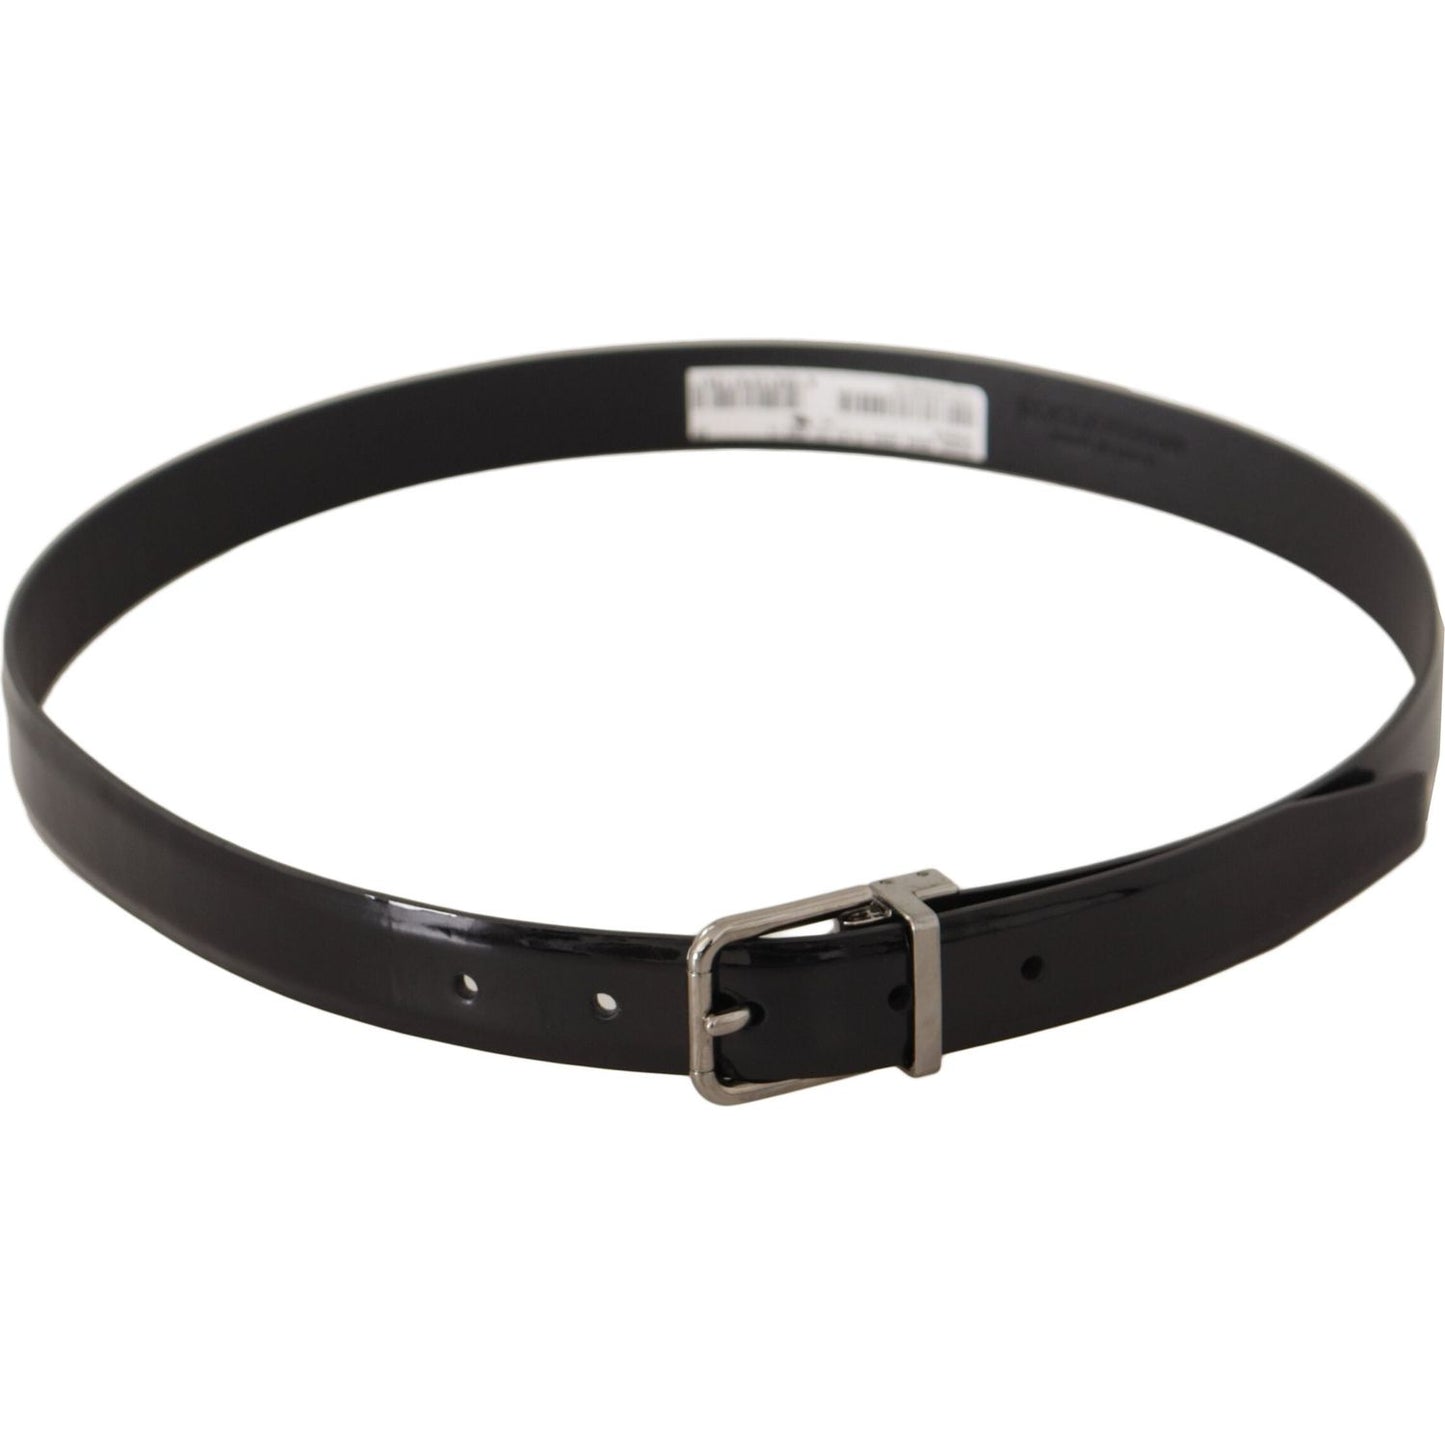 Dolce & Gabbana Elegant Black Leather Belt with Metal Buckle black-calf-leather-silver-tone-metal-buckle-belt-6